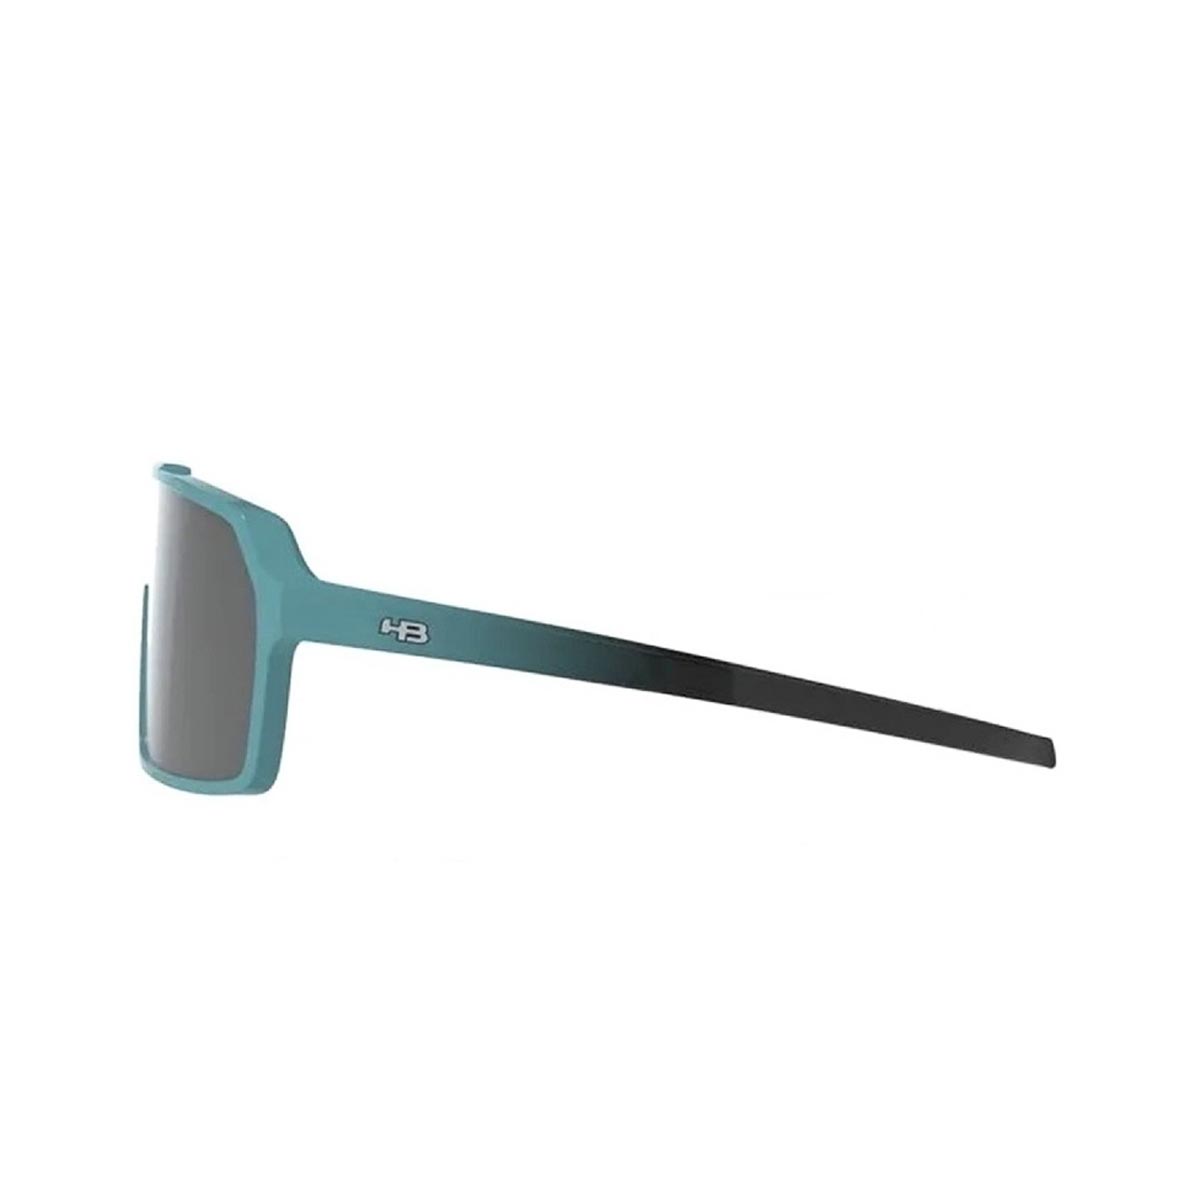 Oculos para Ciclismo HB Grinder Verde Turquesa Gradiente Fosco Lente Silver Espelhada